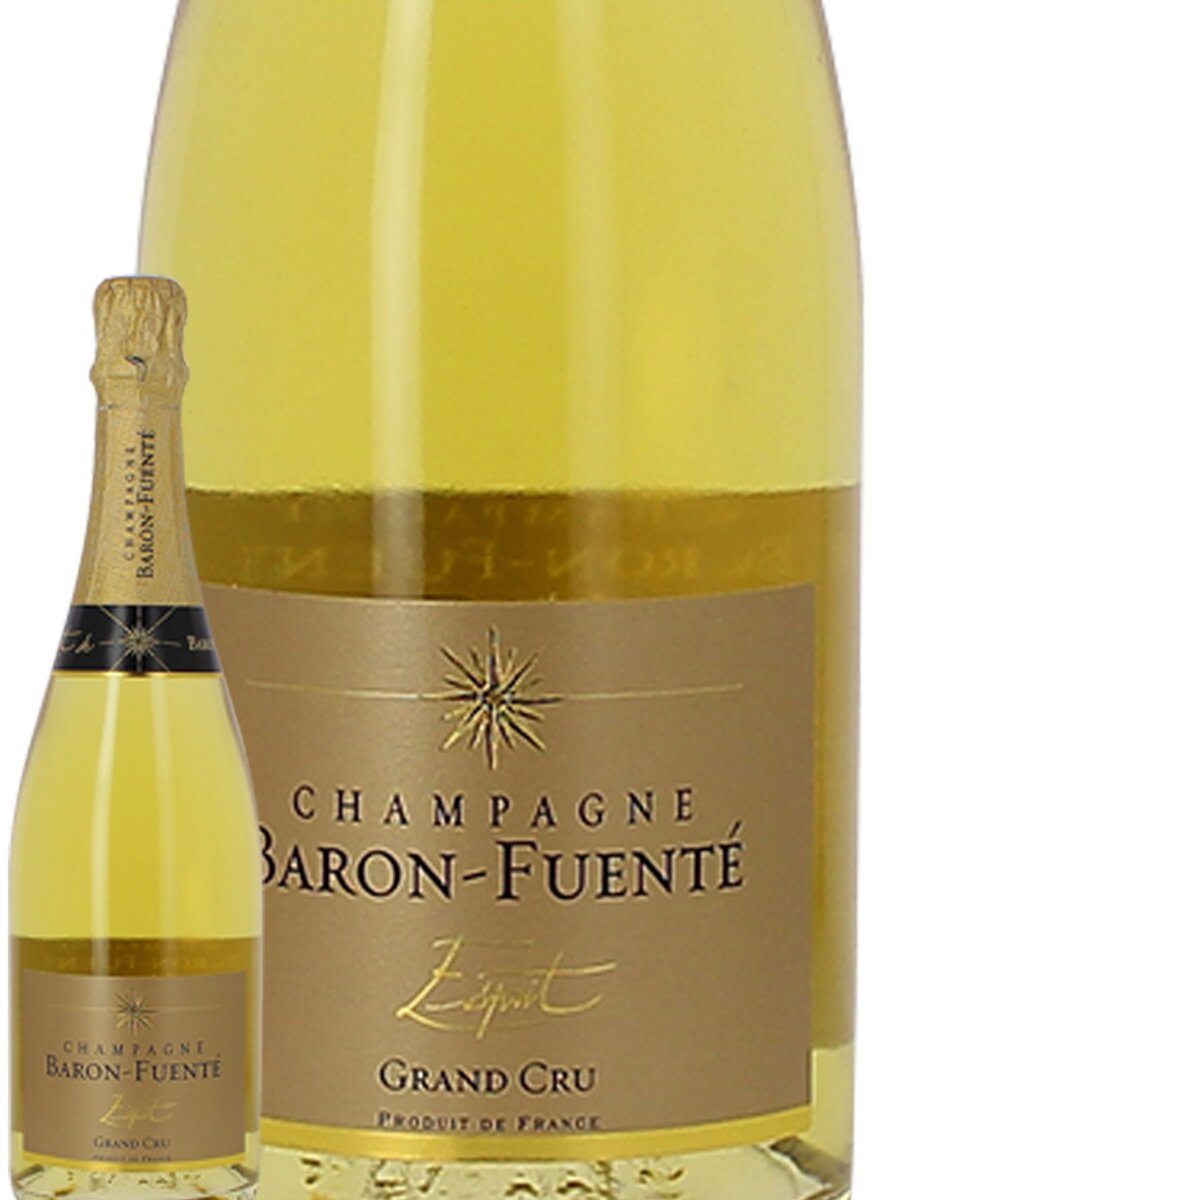 Baron Fuente Champagne Brut Baron-Fuenté Esprit Grand Cru